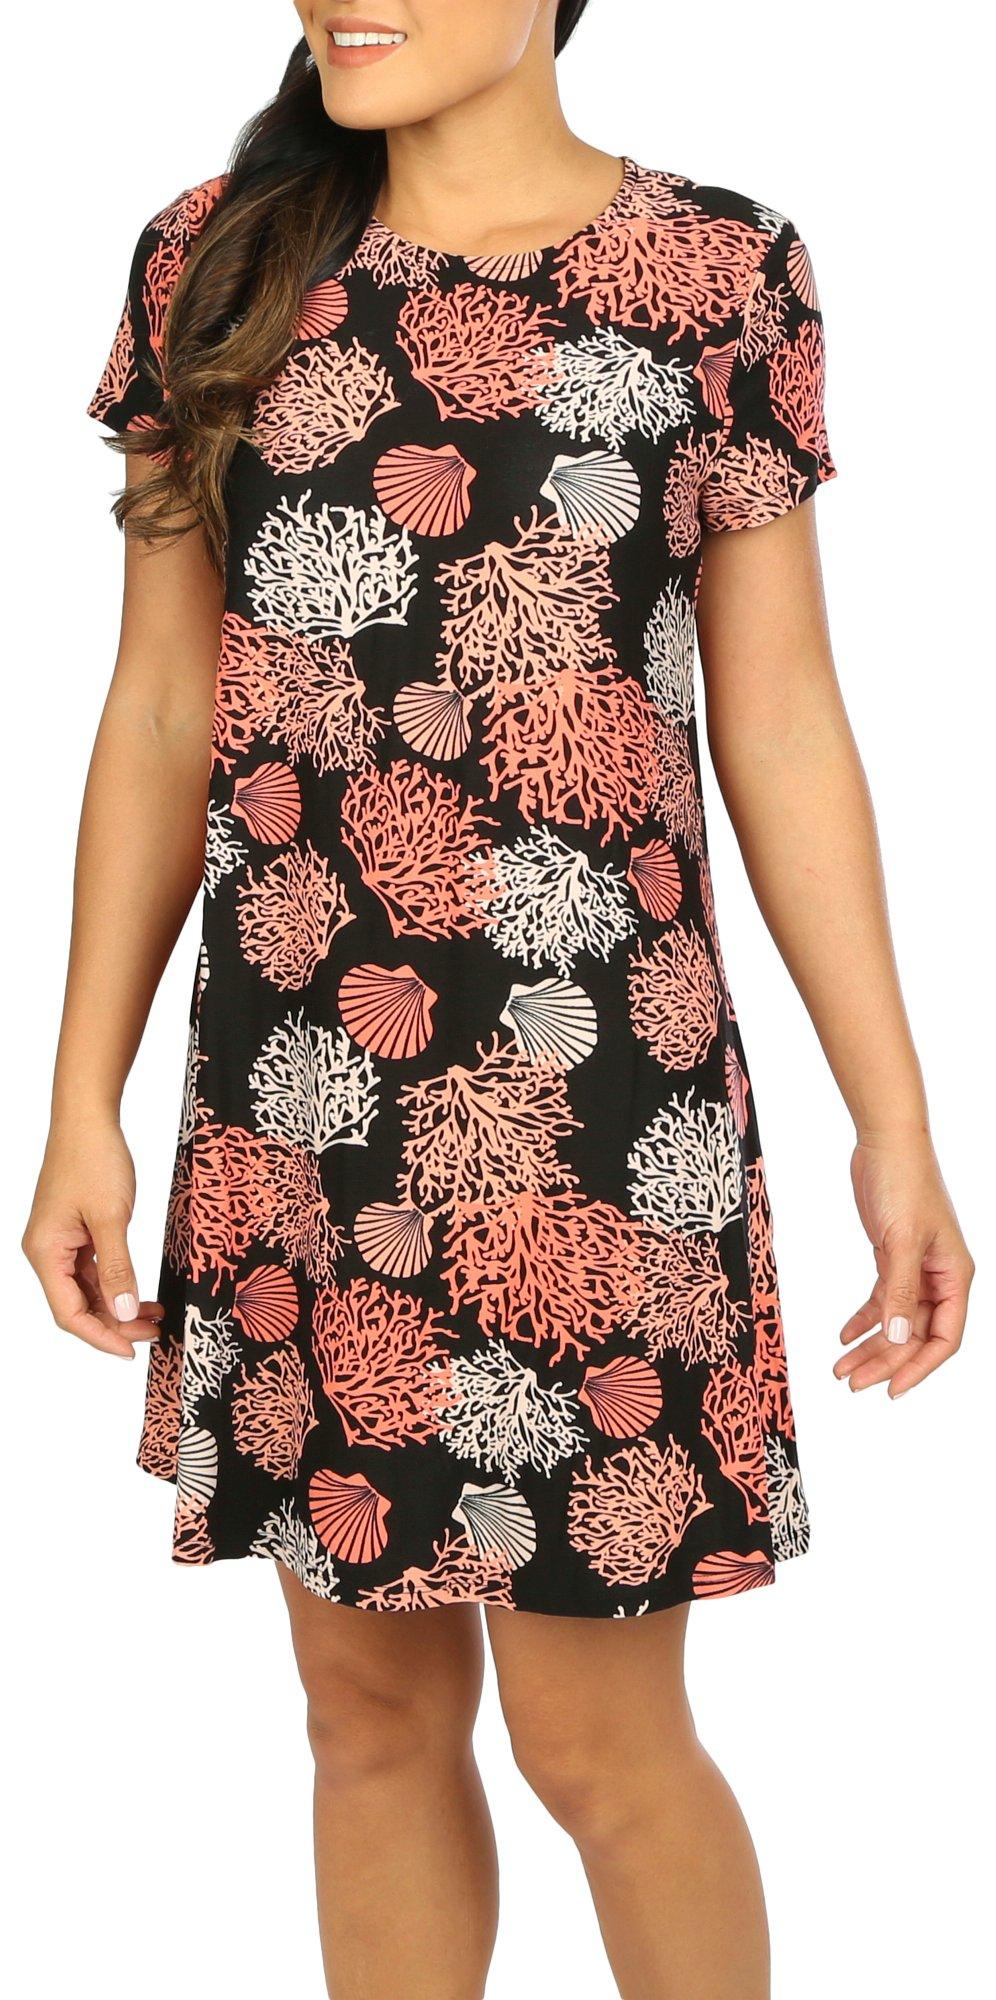 Allison Brittney Womens Coral Reef Yummy Short Sleeve Dress